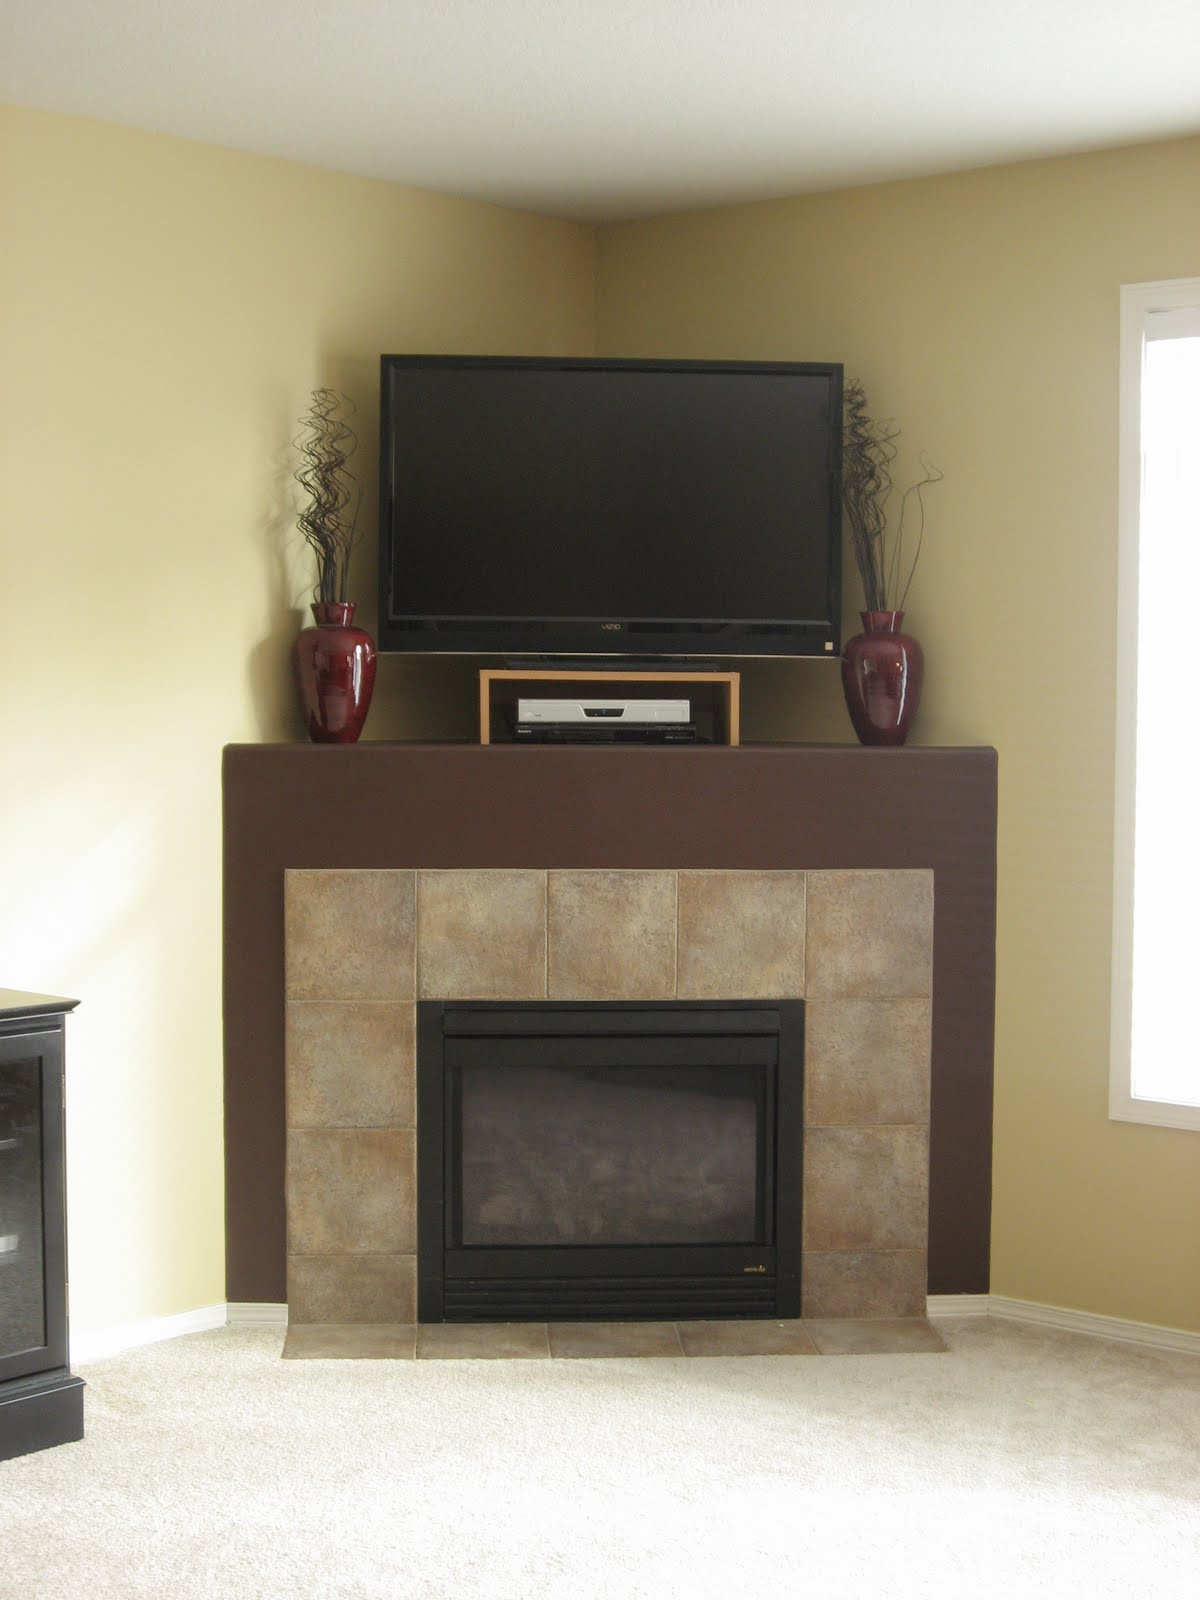 Best ideas about Corner Fireplace Ideas
. Save or Pin Corner Fireplace Decorating Ideas Now.